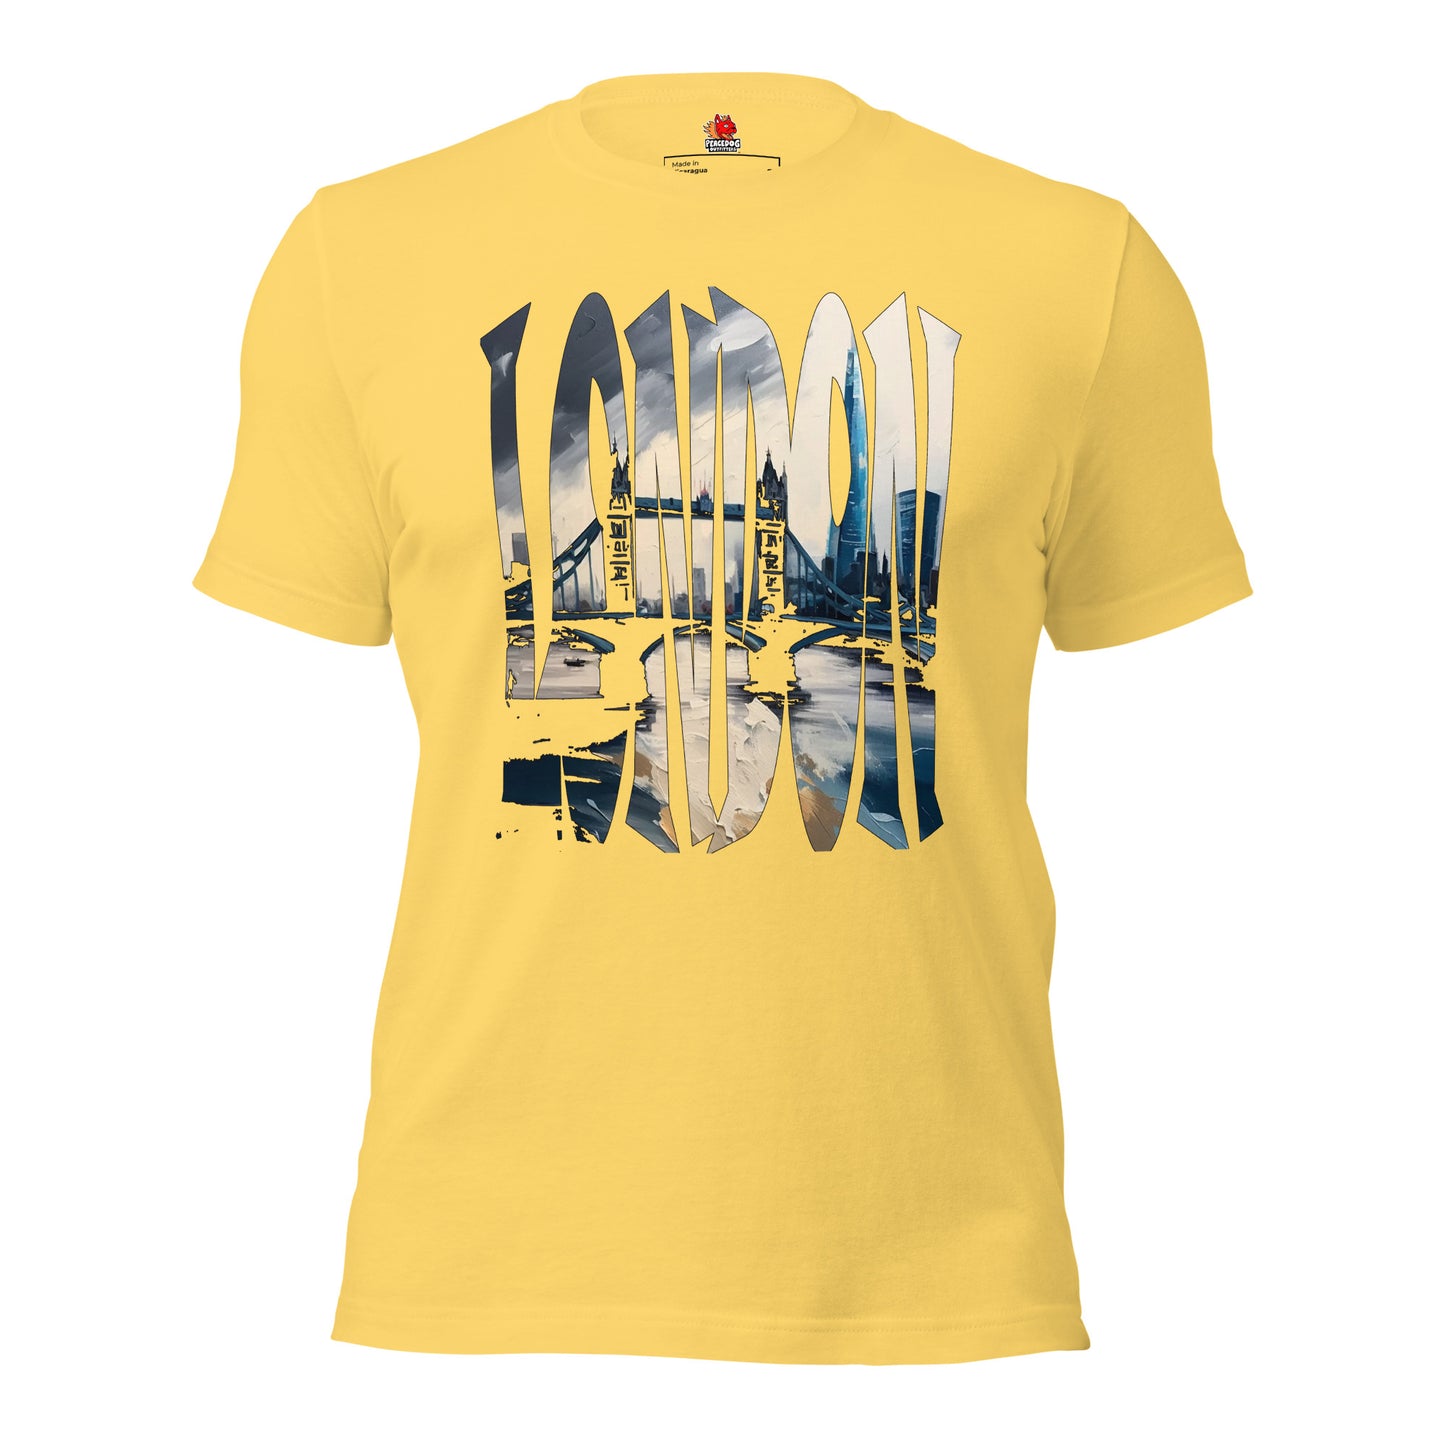 London Skyline Typography T-shirt